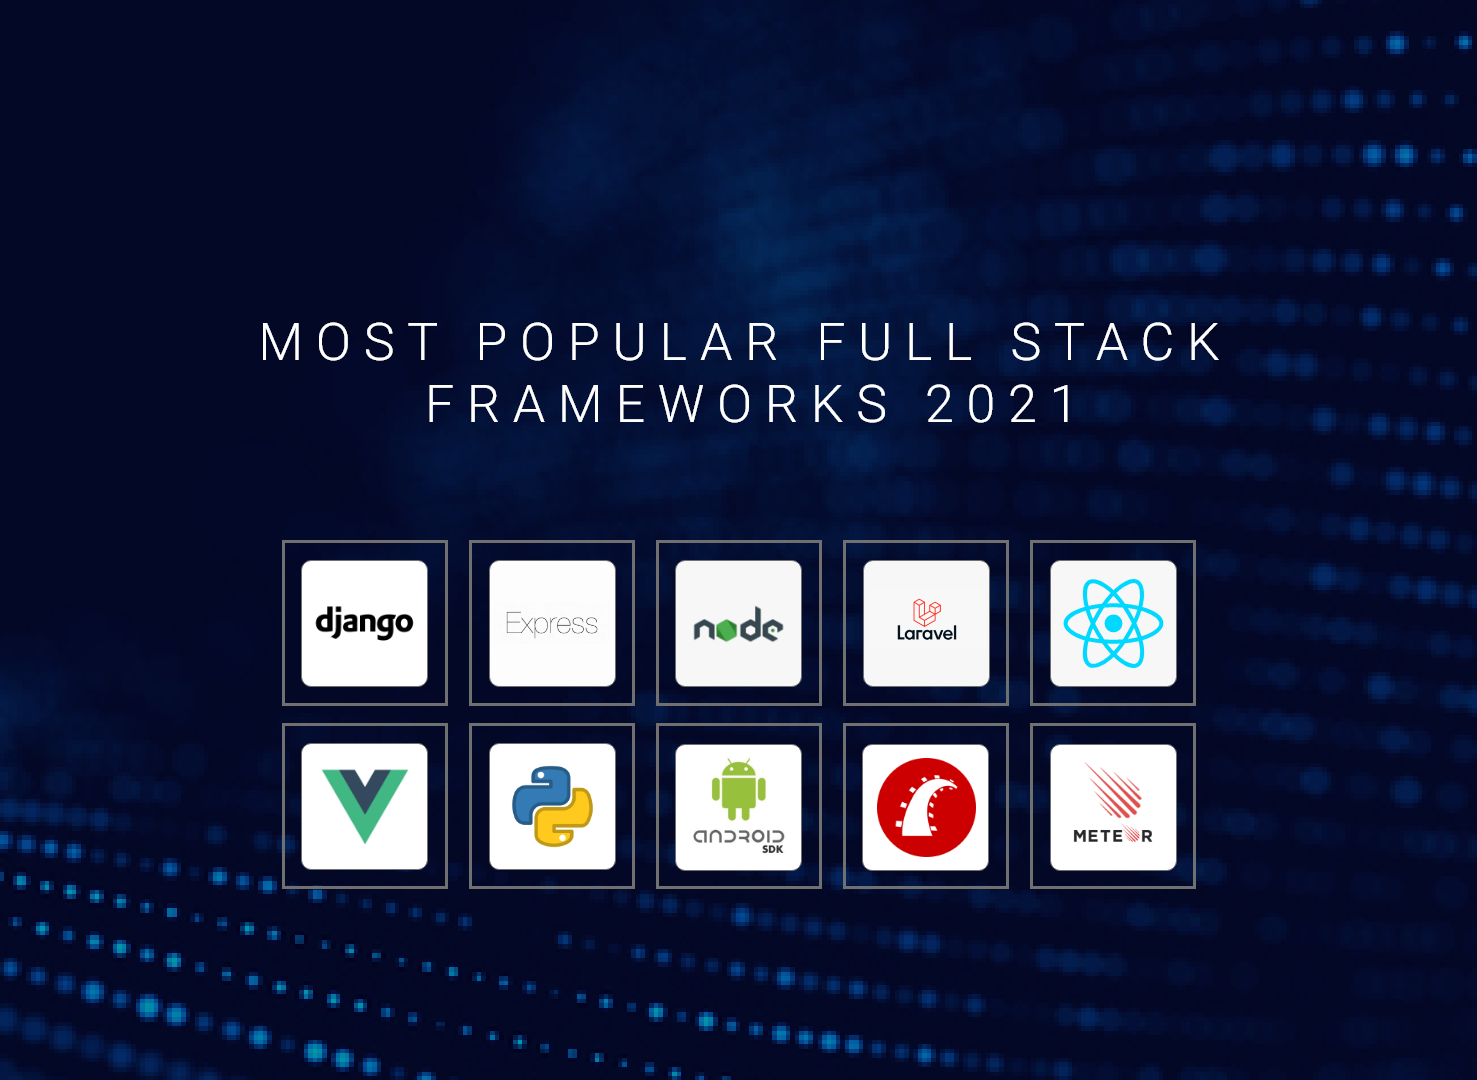 Most popular full stack frameworks in 2021